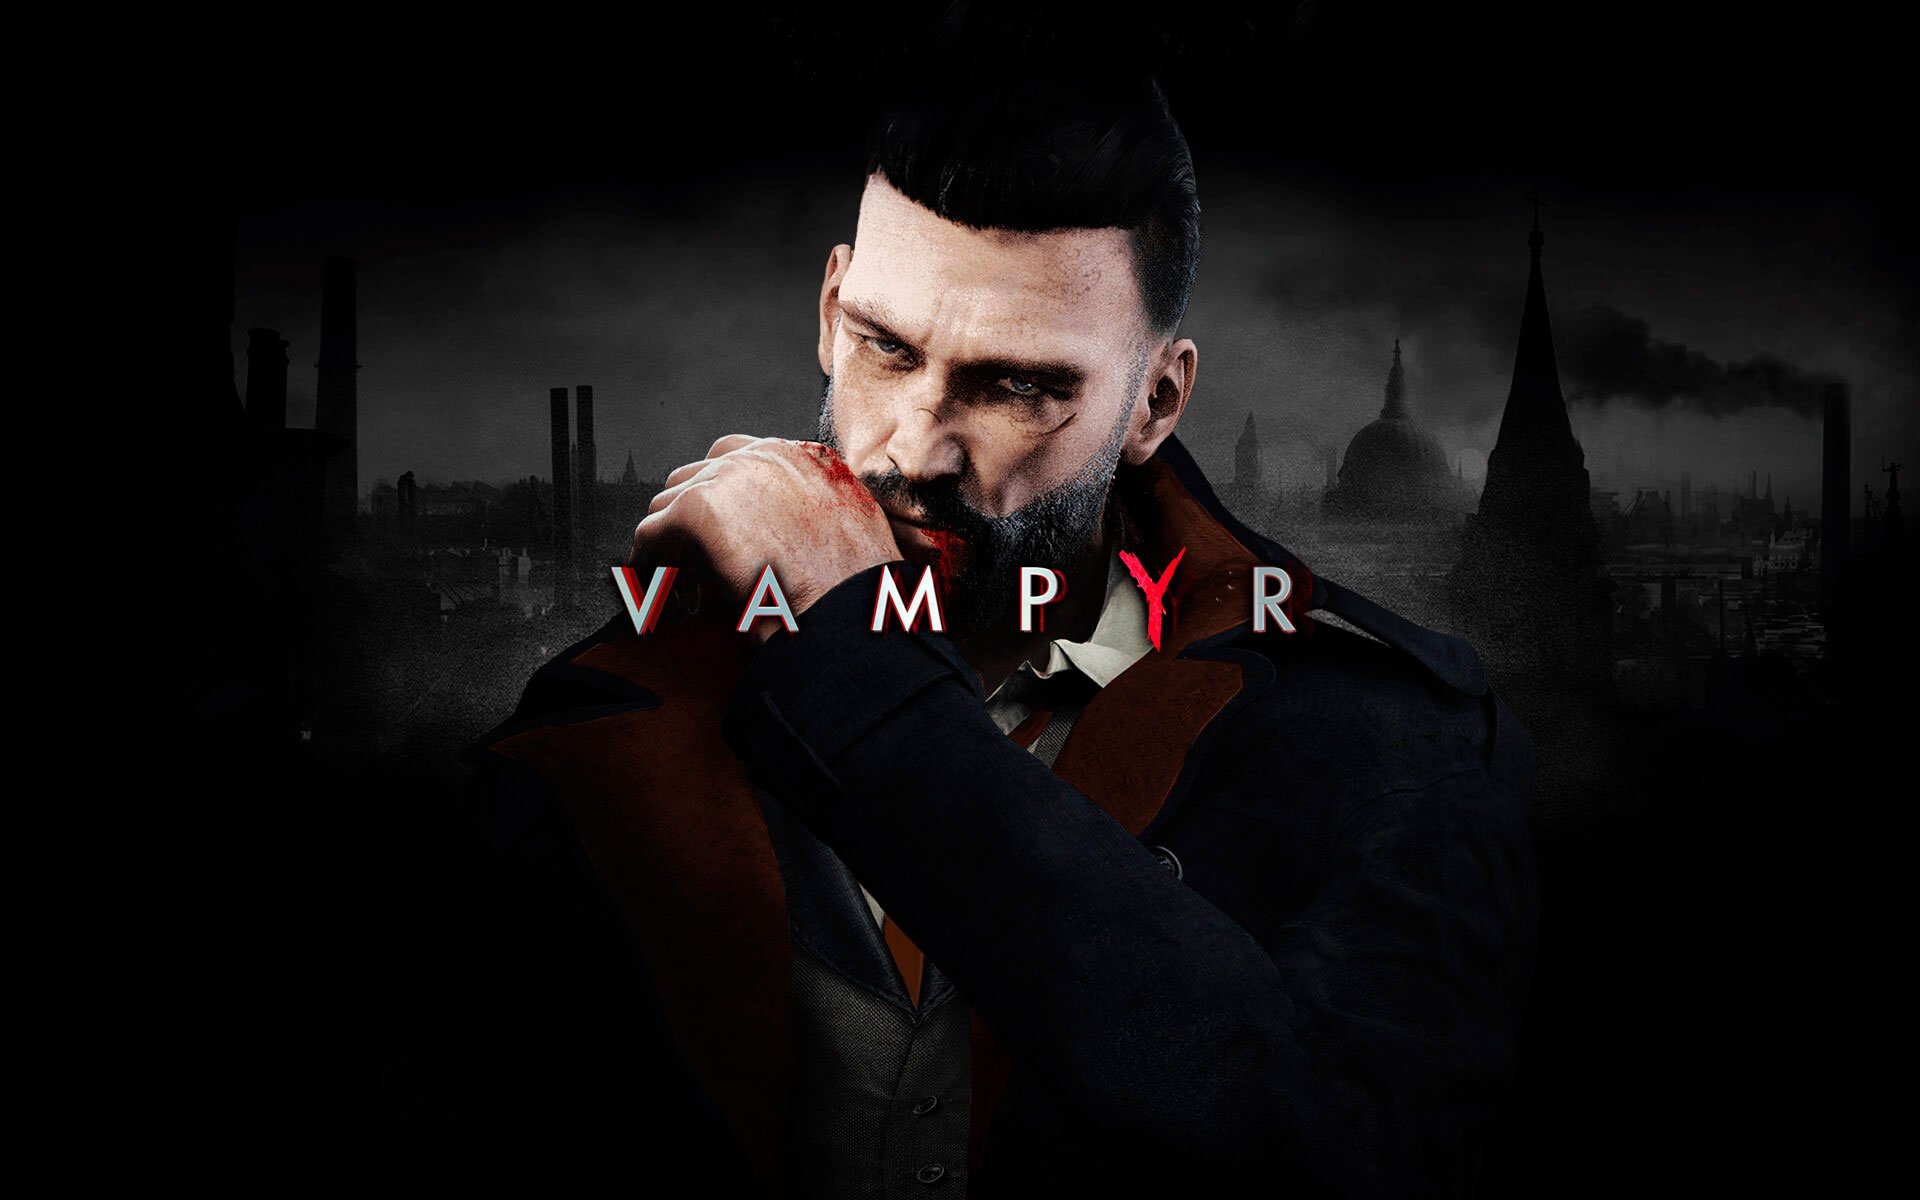 Compre Vampyr a partir de R$ 149.90